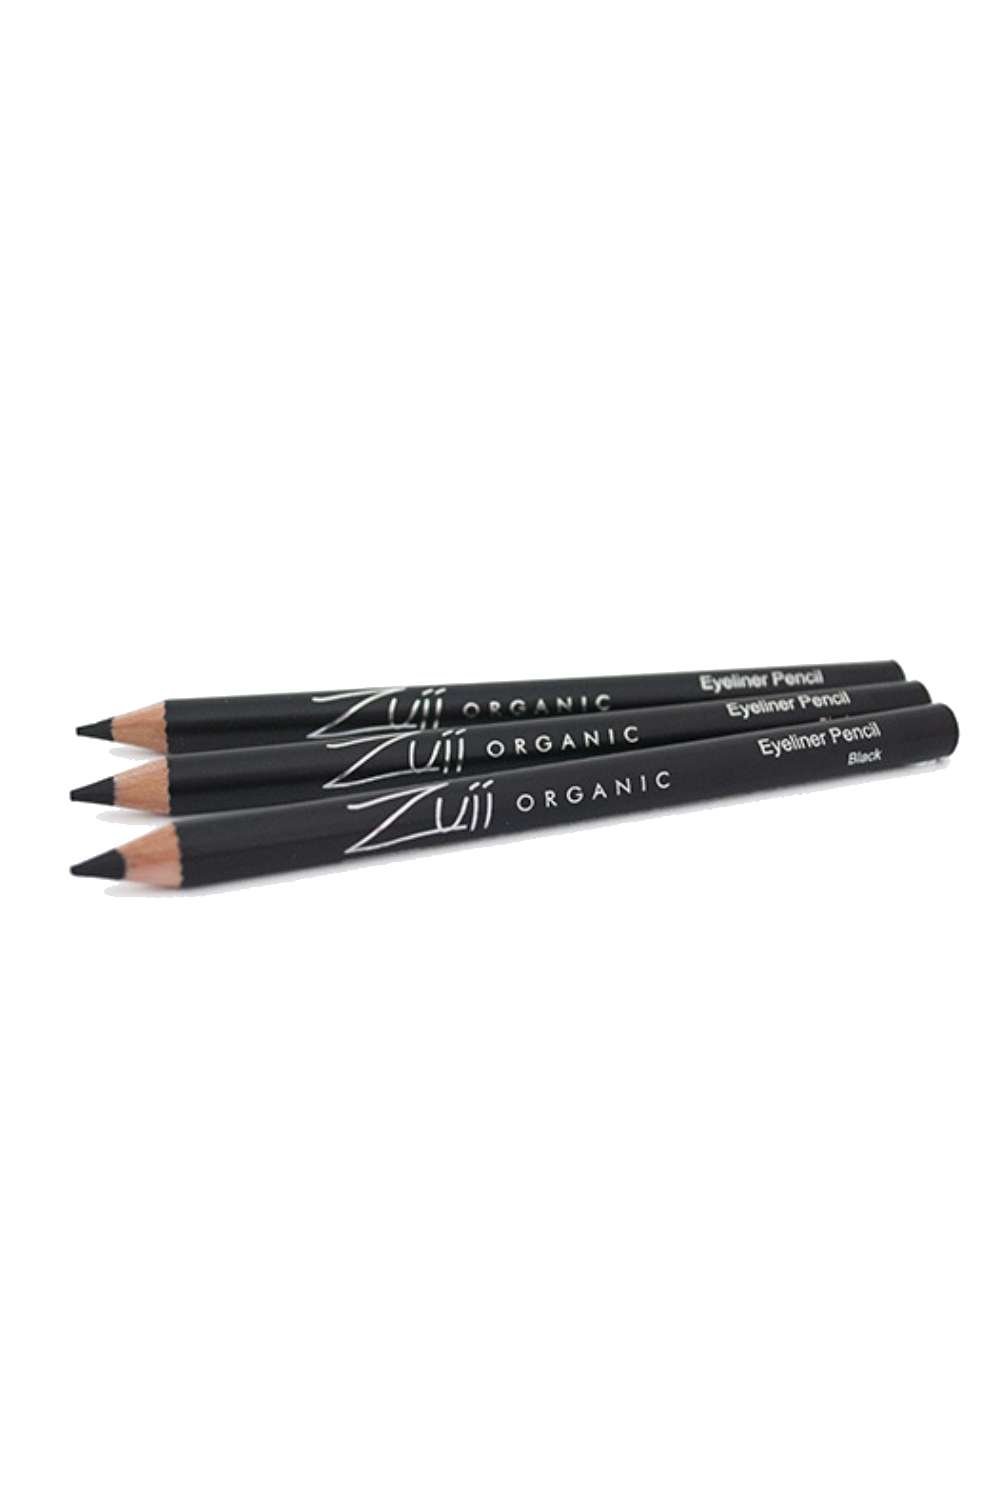 Zuii Organic Certified Eyeliner Pencil -Brown